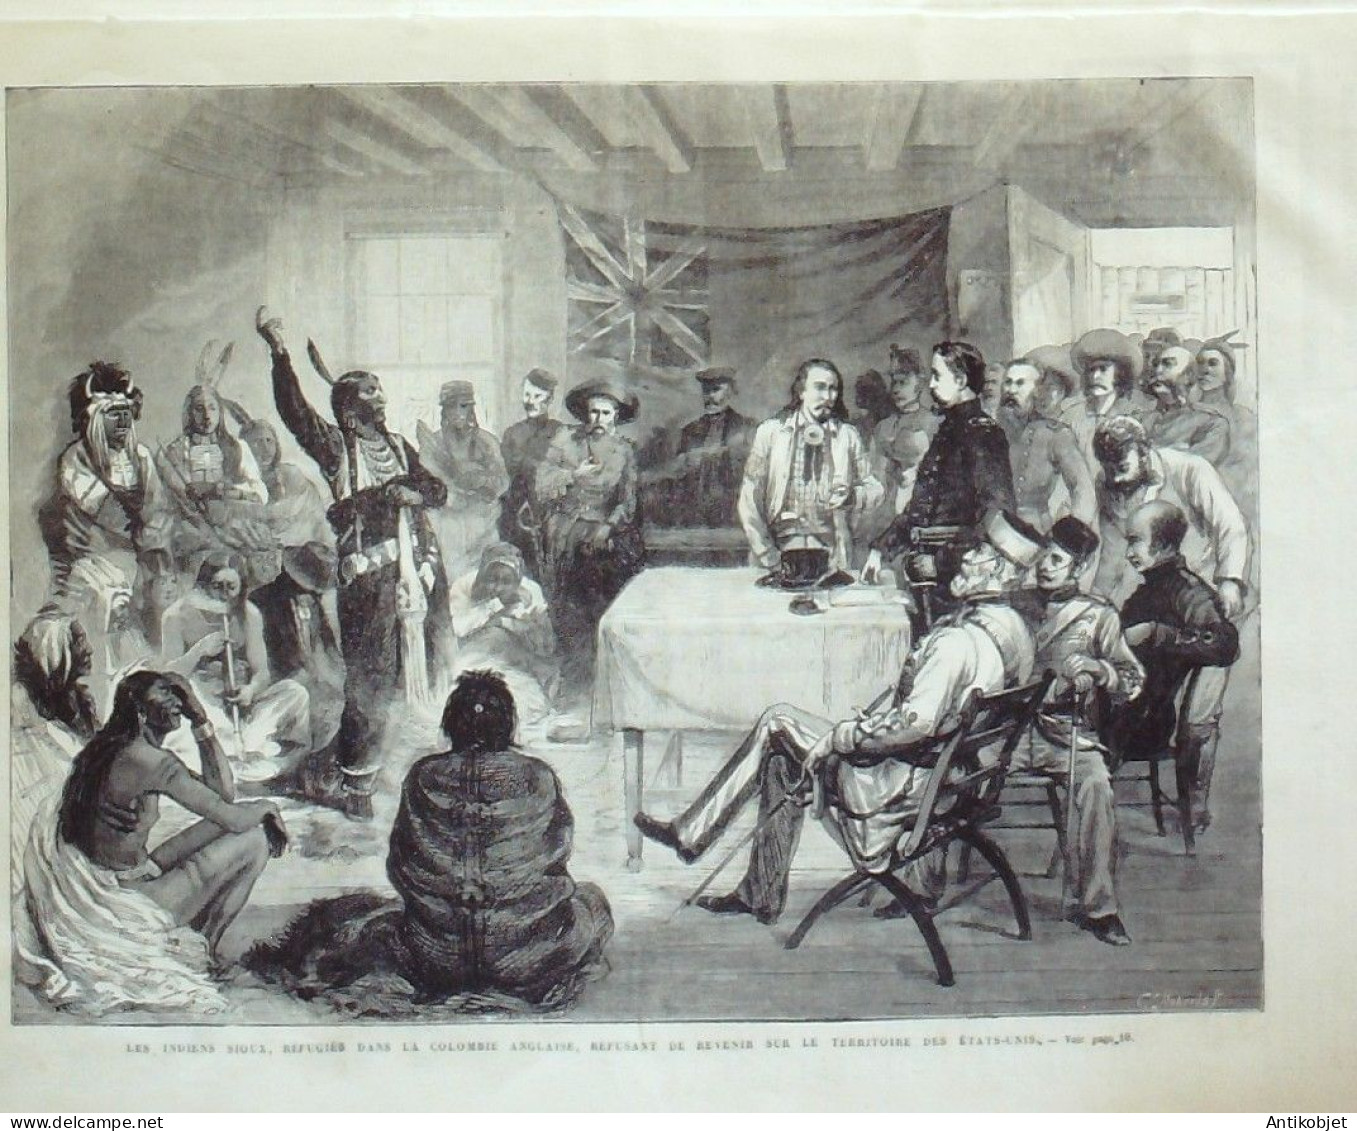 L'Univers illustré 1878 n°1189 Bulgarie Plevna Tcherkesses Turquie Hainkioi indiens sioux